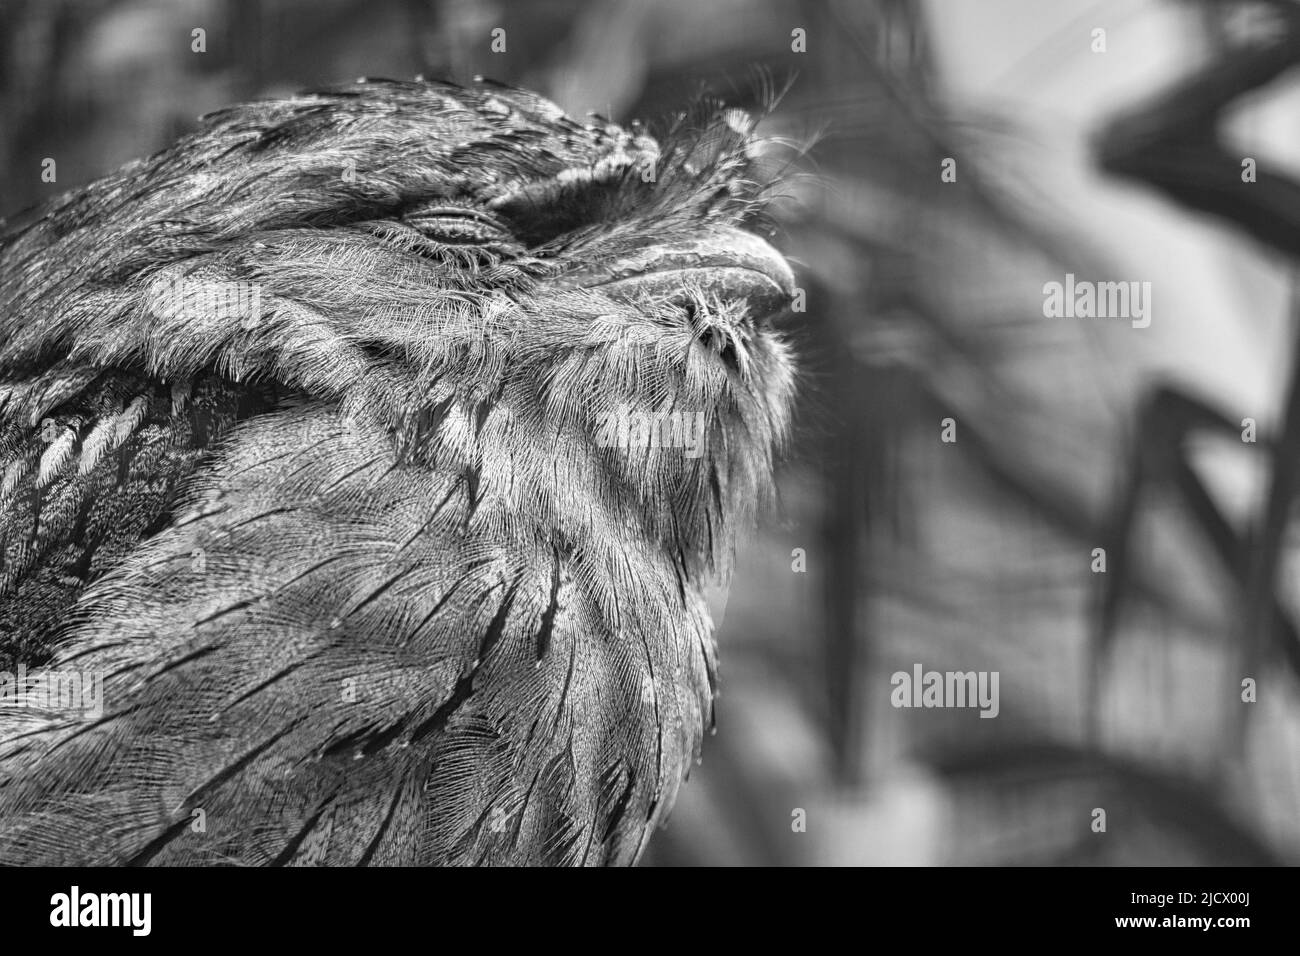 a small kautz on a tree trunk. Eyes closed and sleeping. Animal photo of an owl bird. Stock Photo